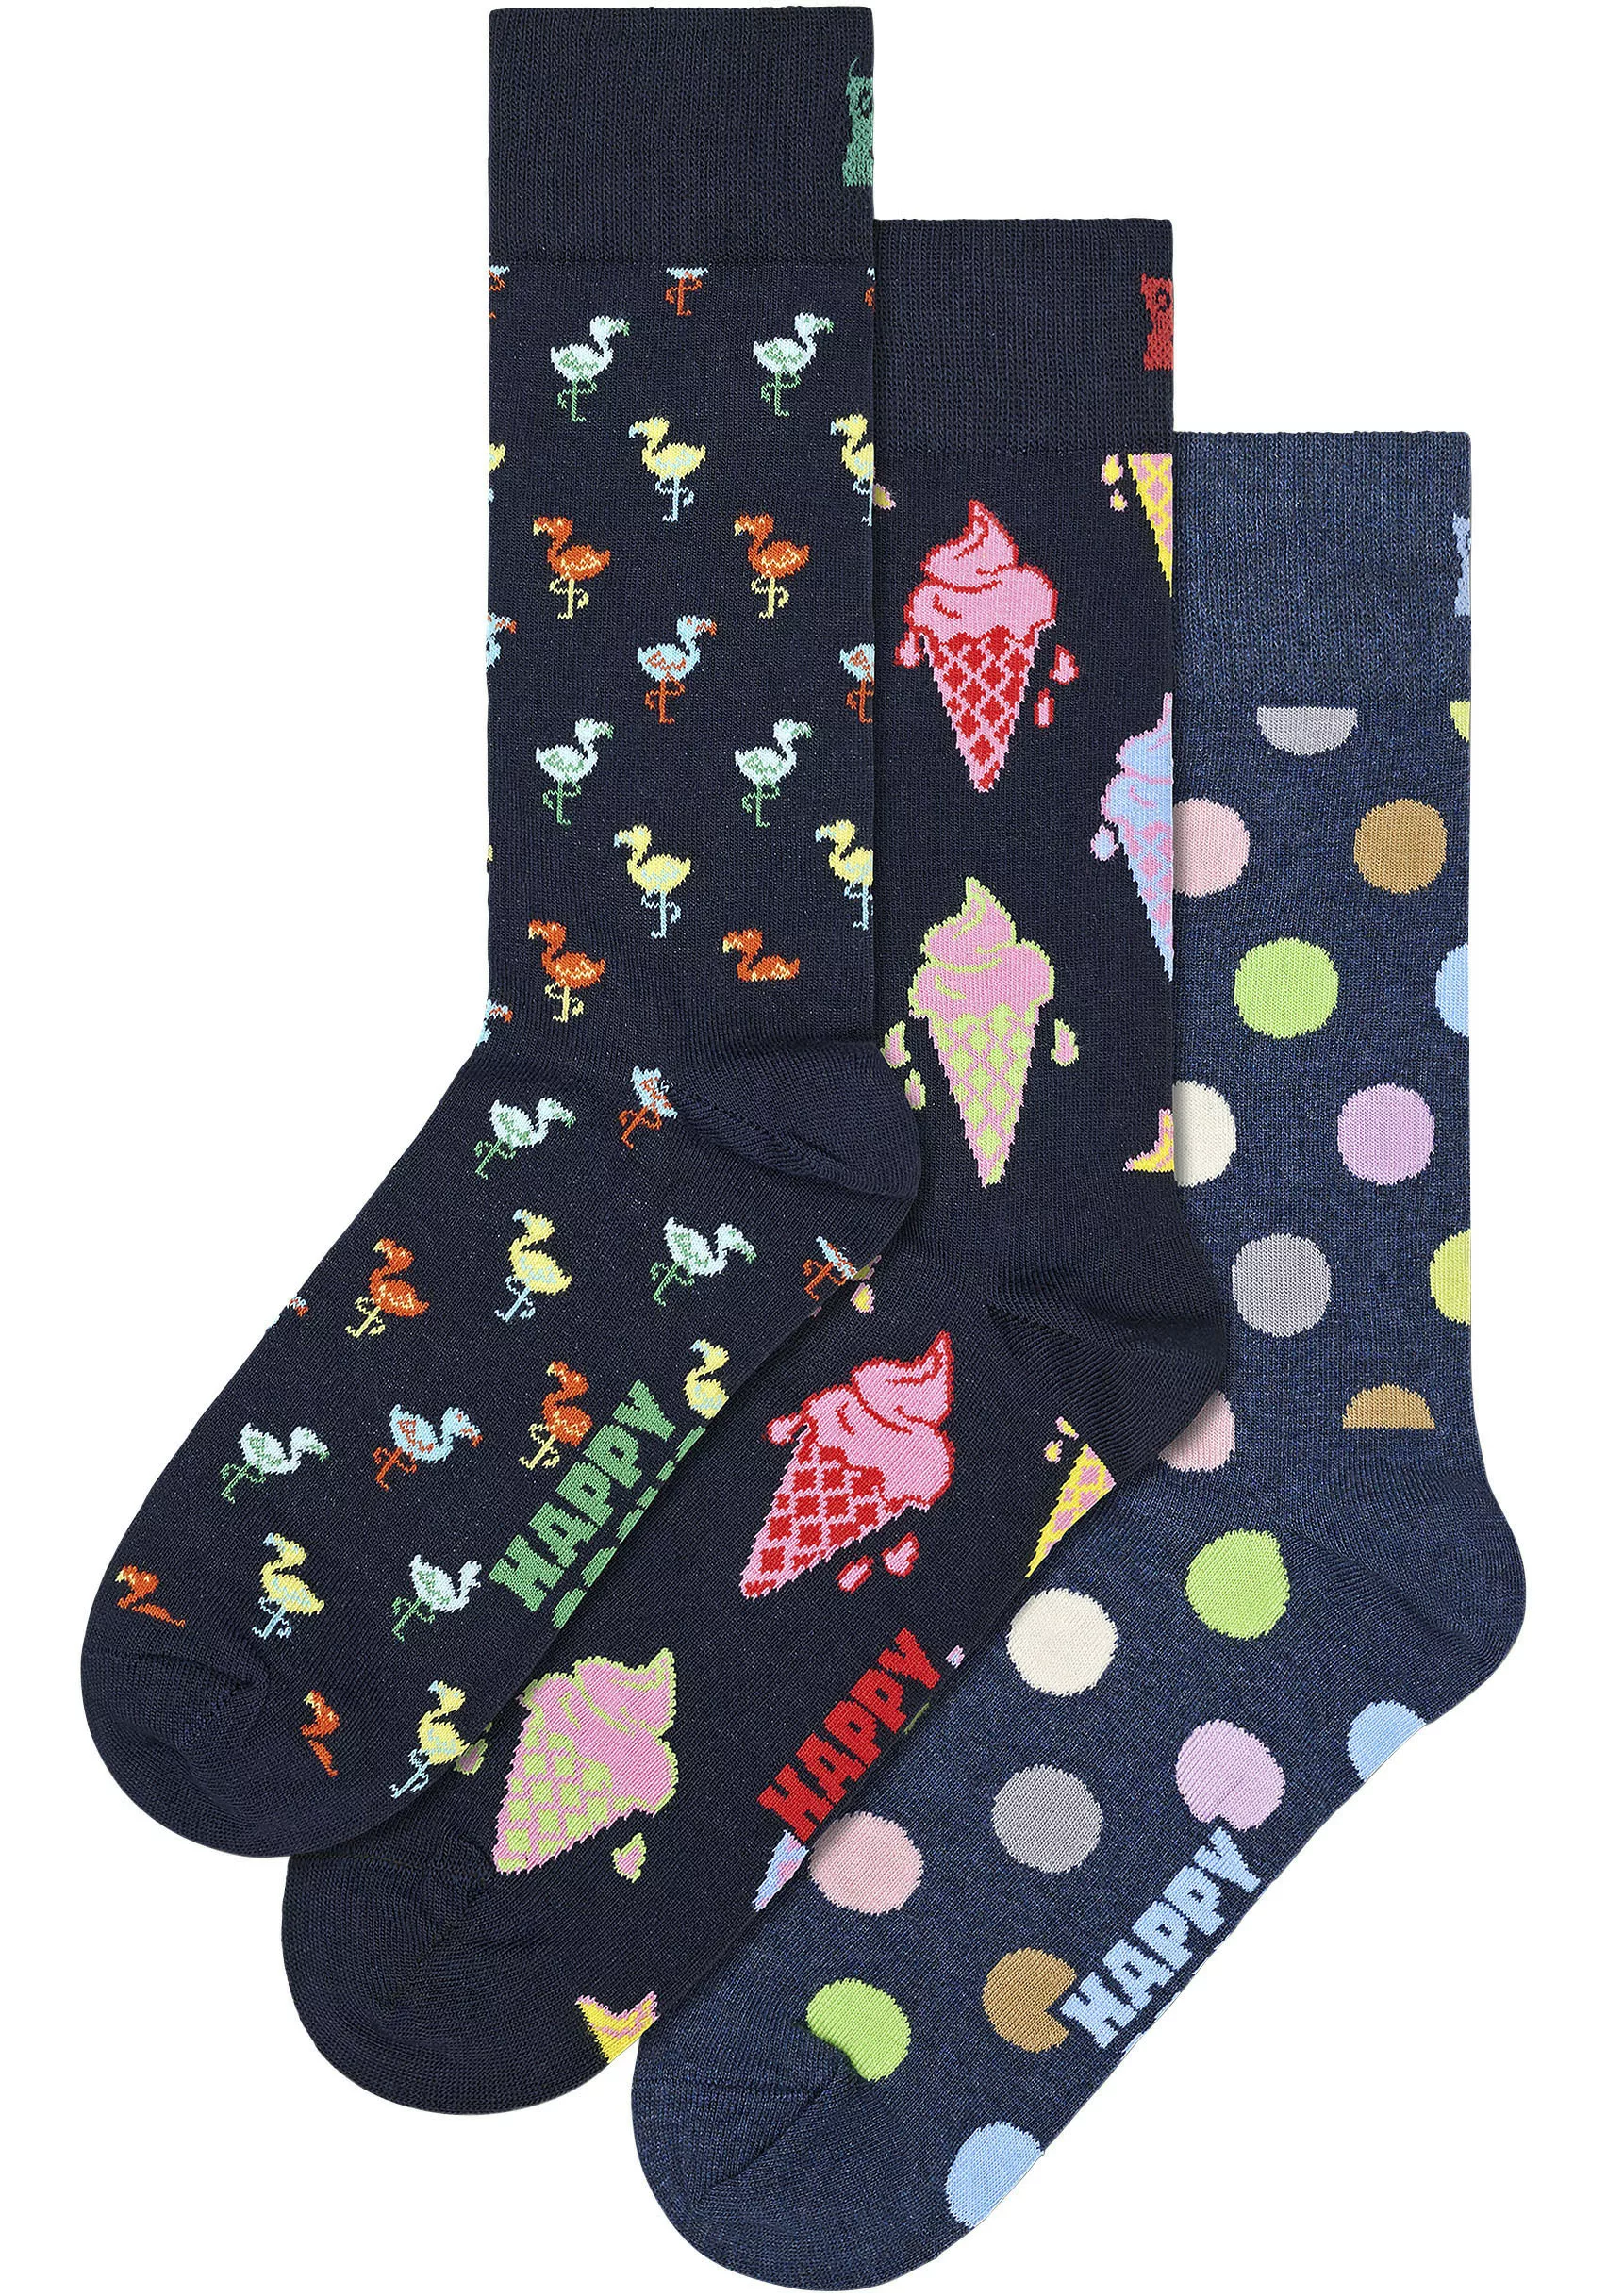 Happy Socks Socken günstig online kaufen